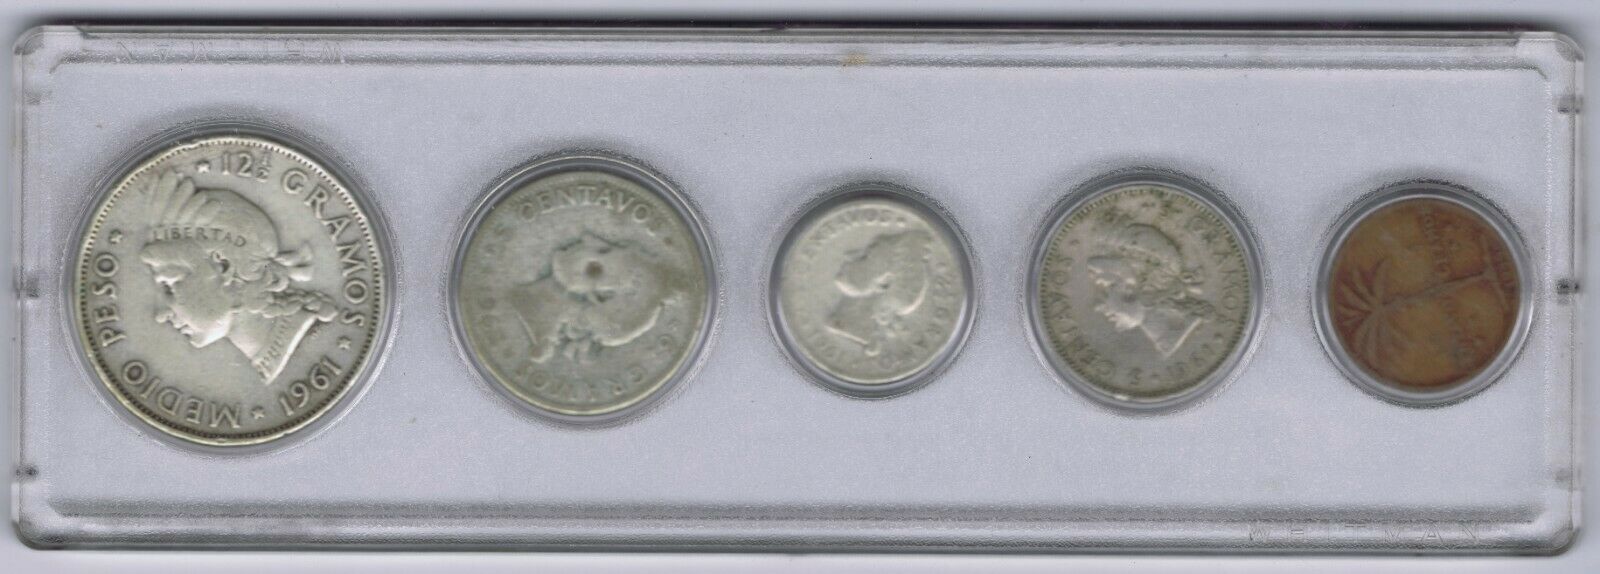 Dominican Republic Coin Set of Five (5) includes 3 Silver Values in Plastic Case